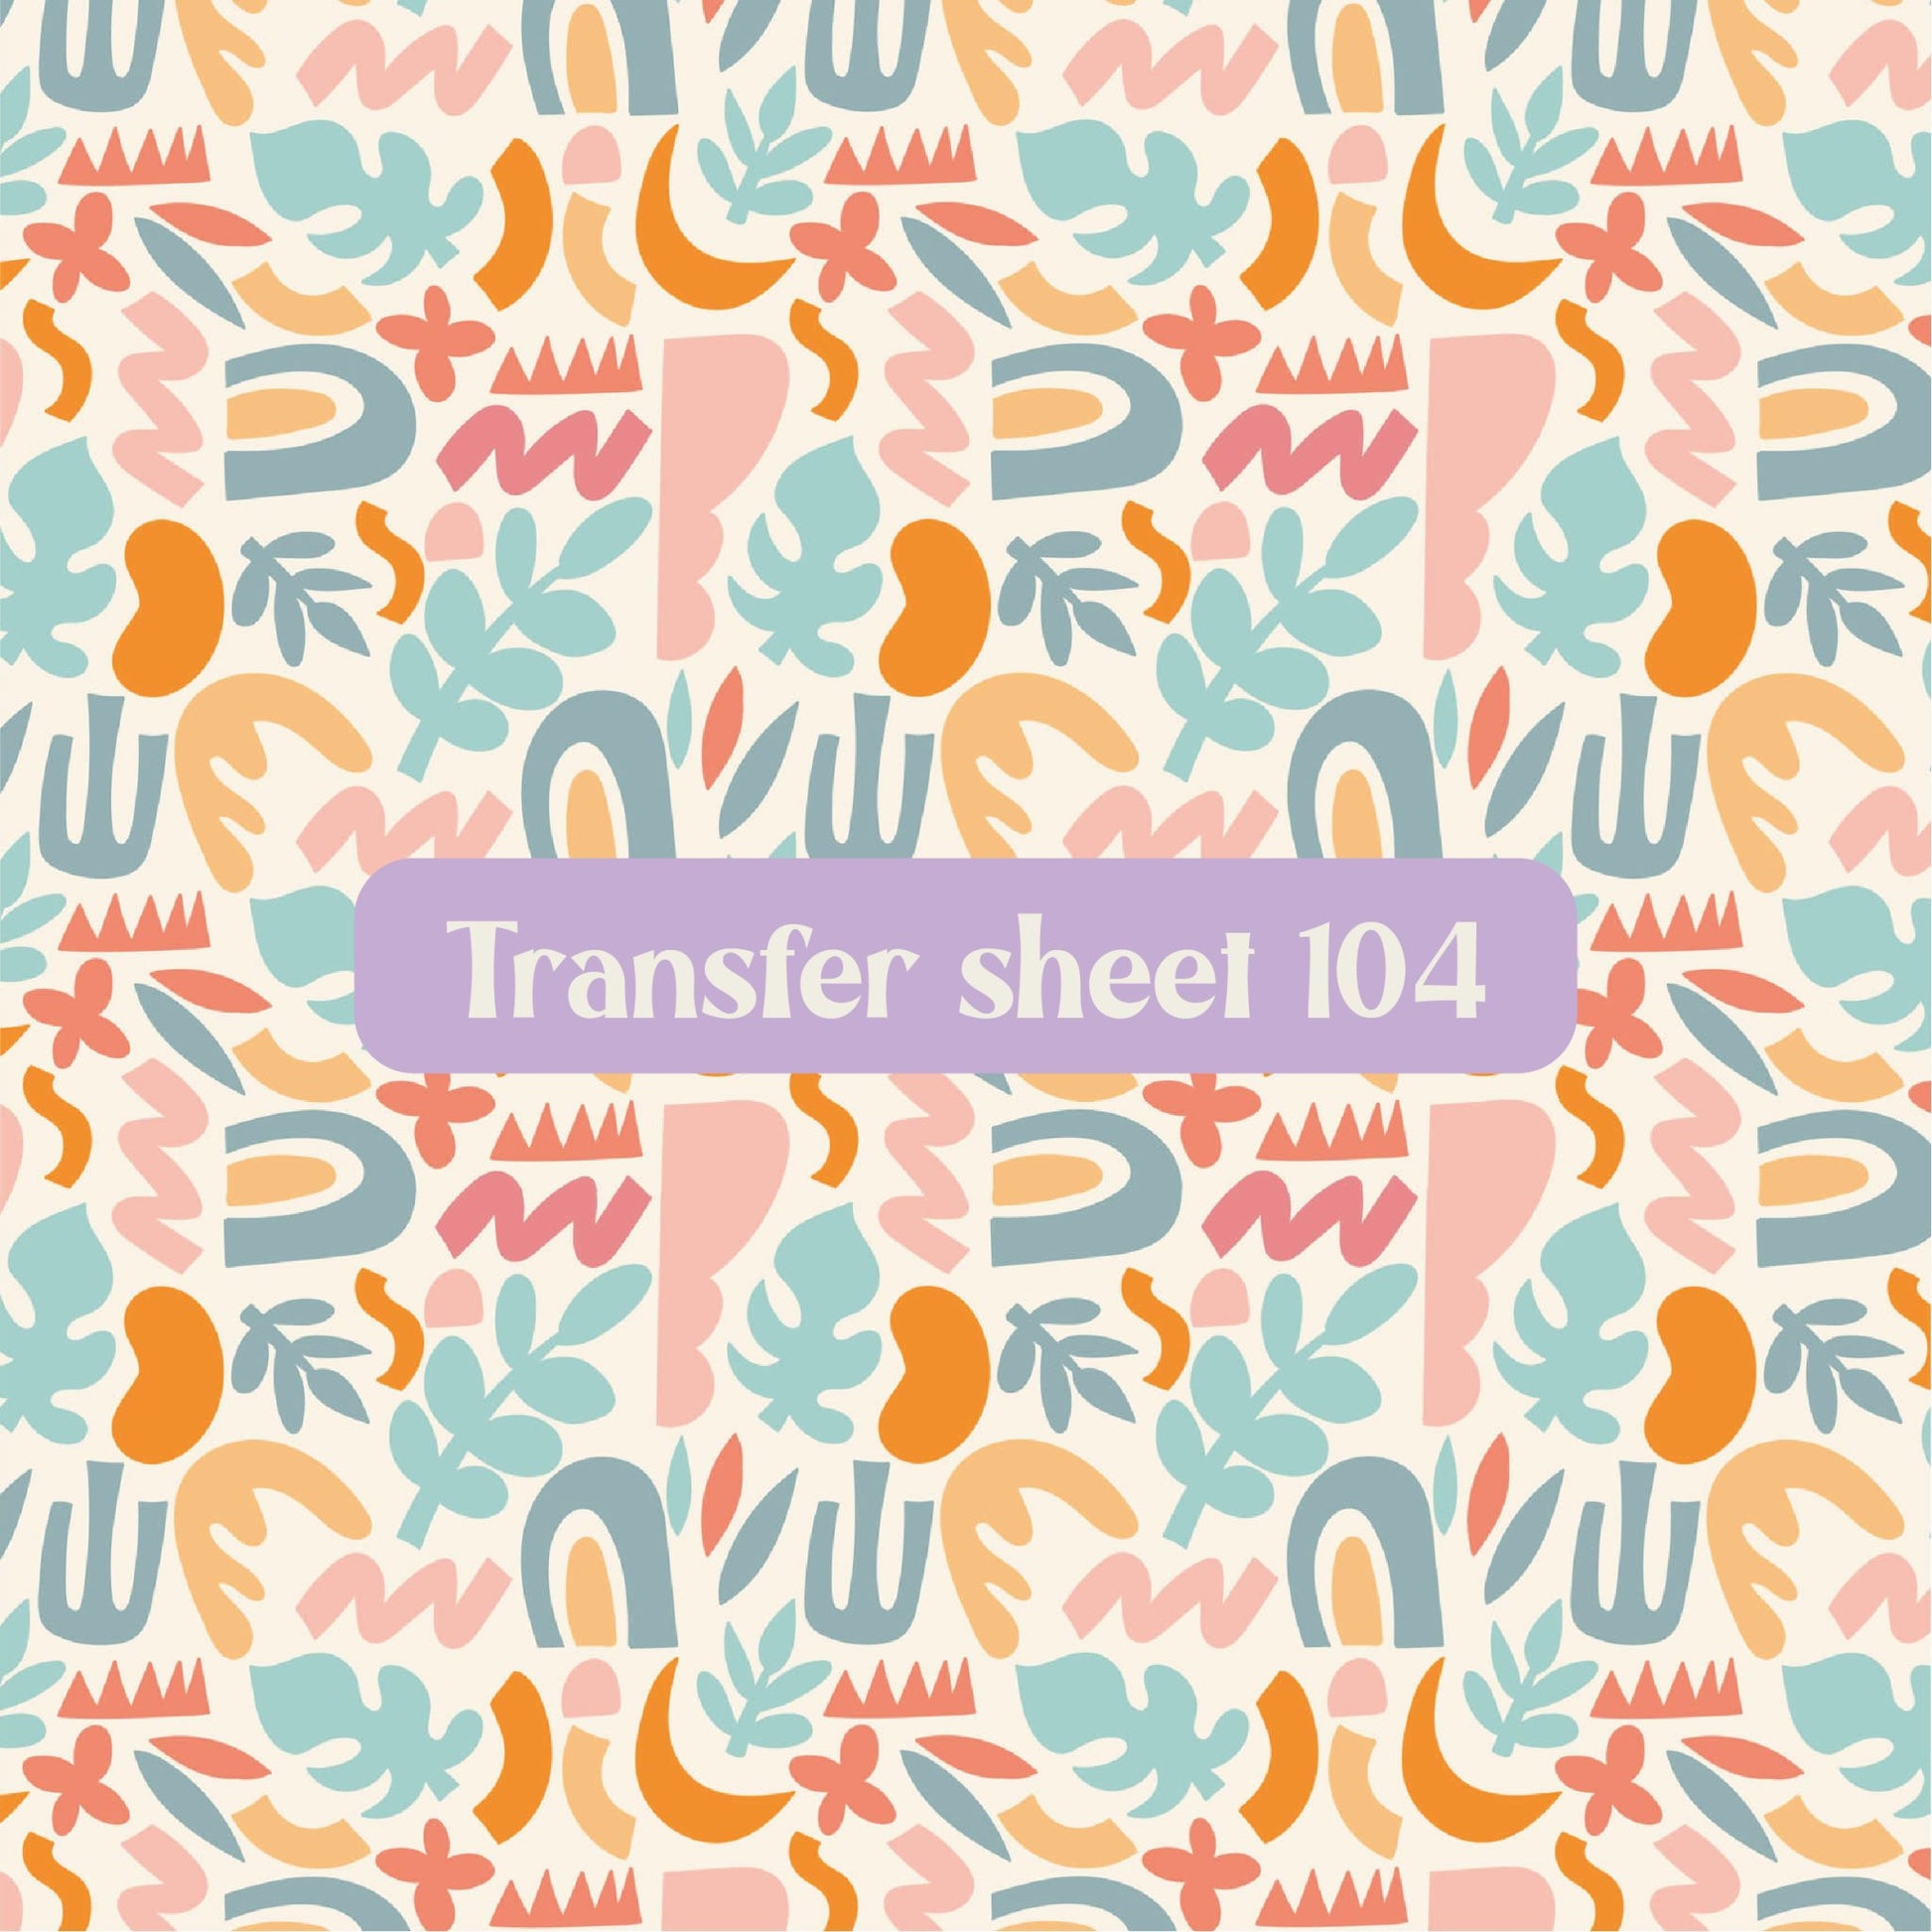 Transfer sheet 104 - Transfer paper - CLN Atelier